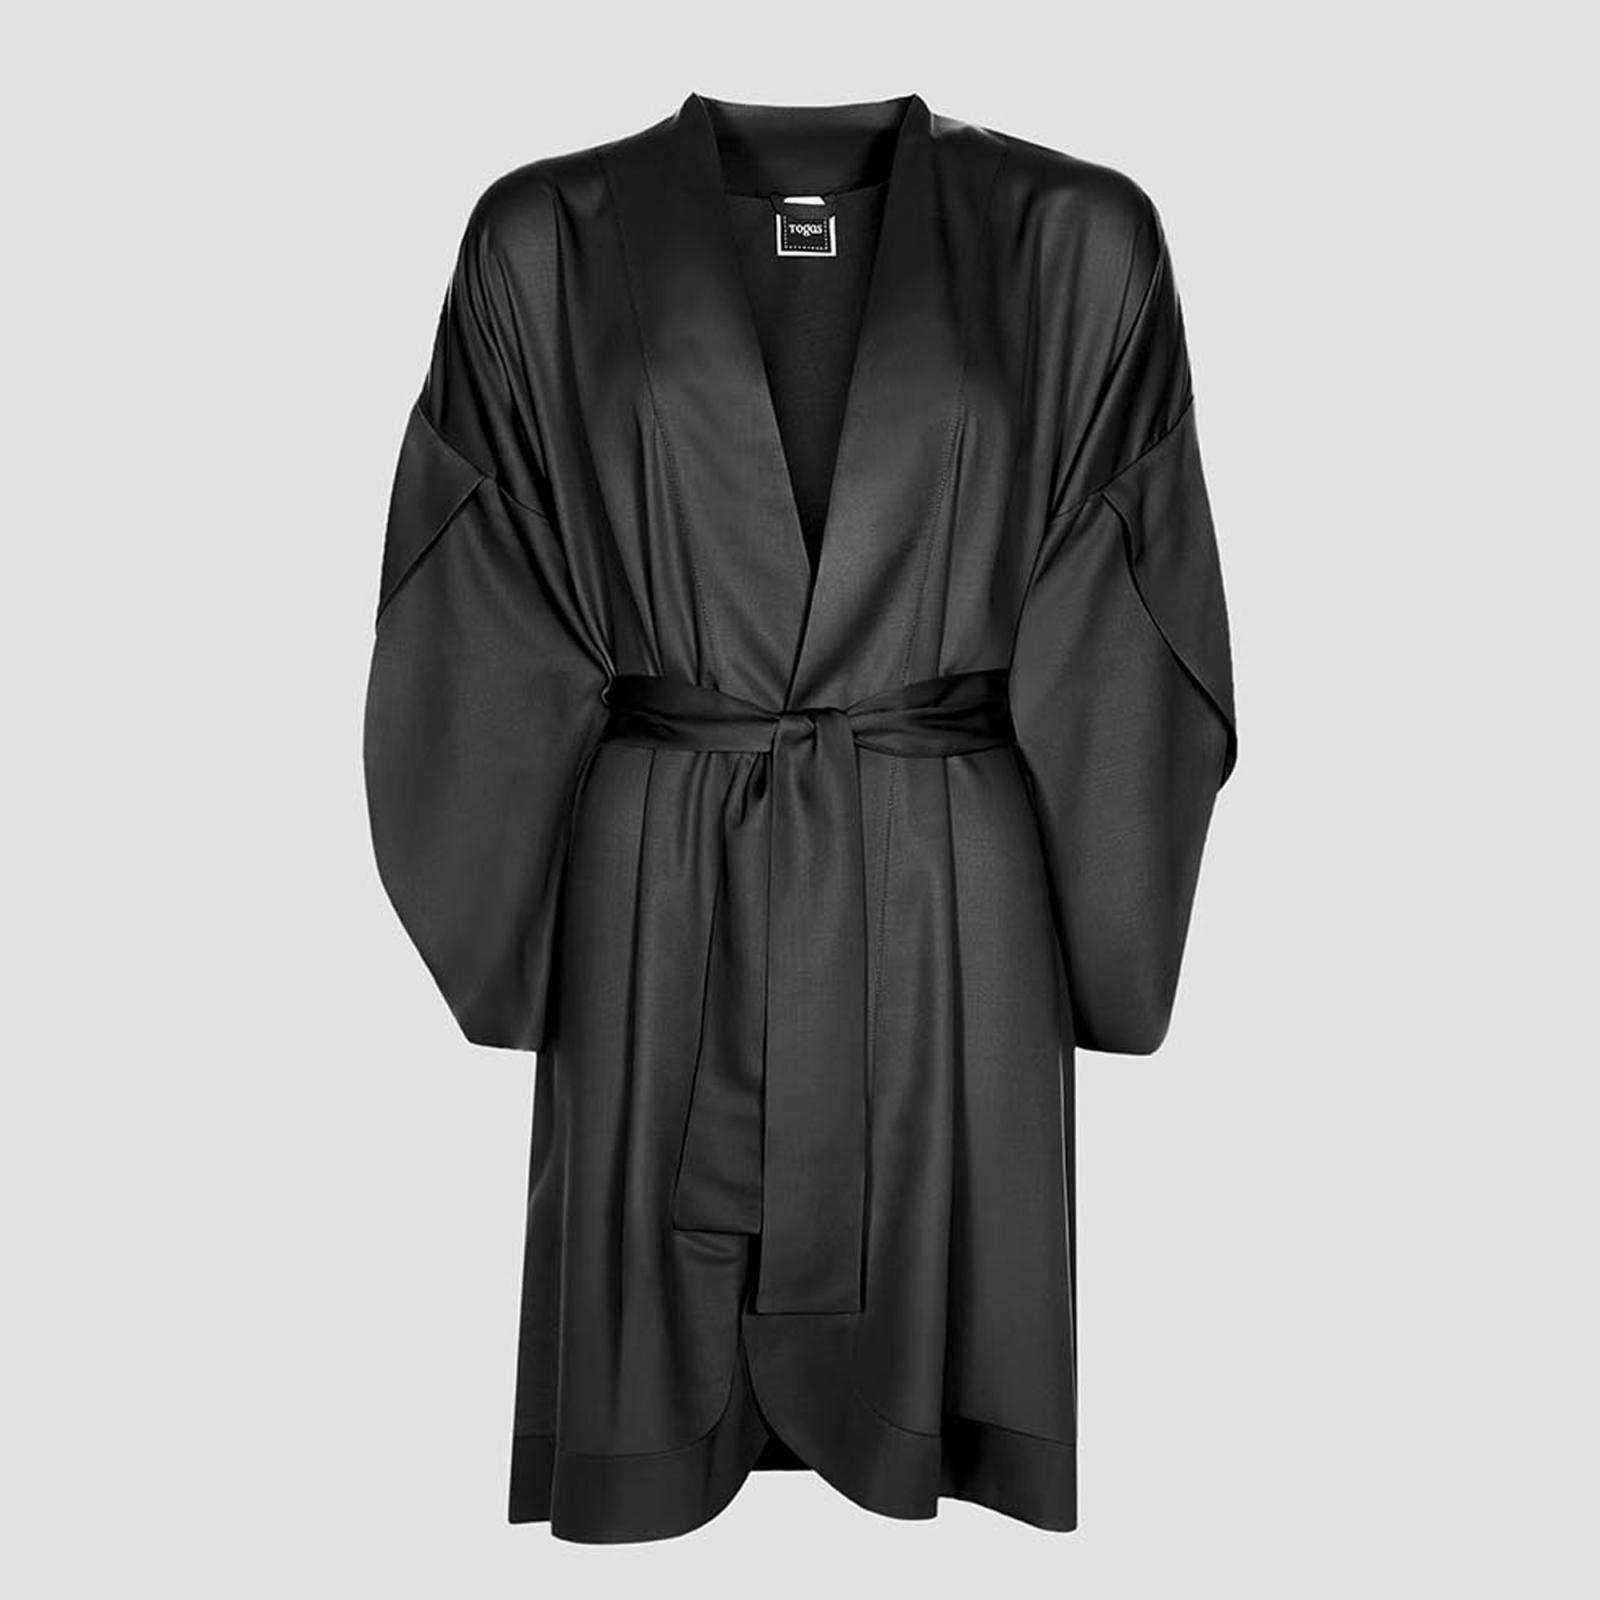 Халат-кимоно короткое Togas Наоми чёрное S (44)